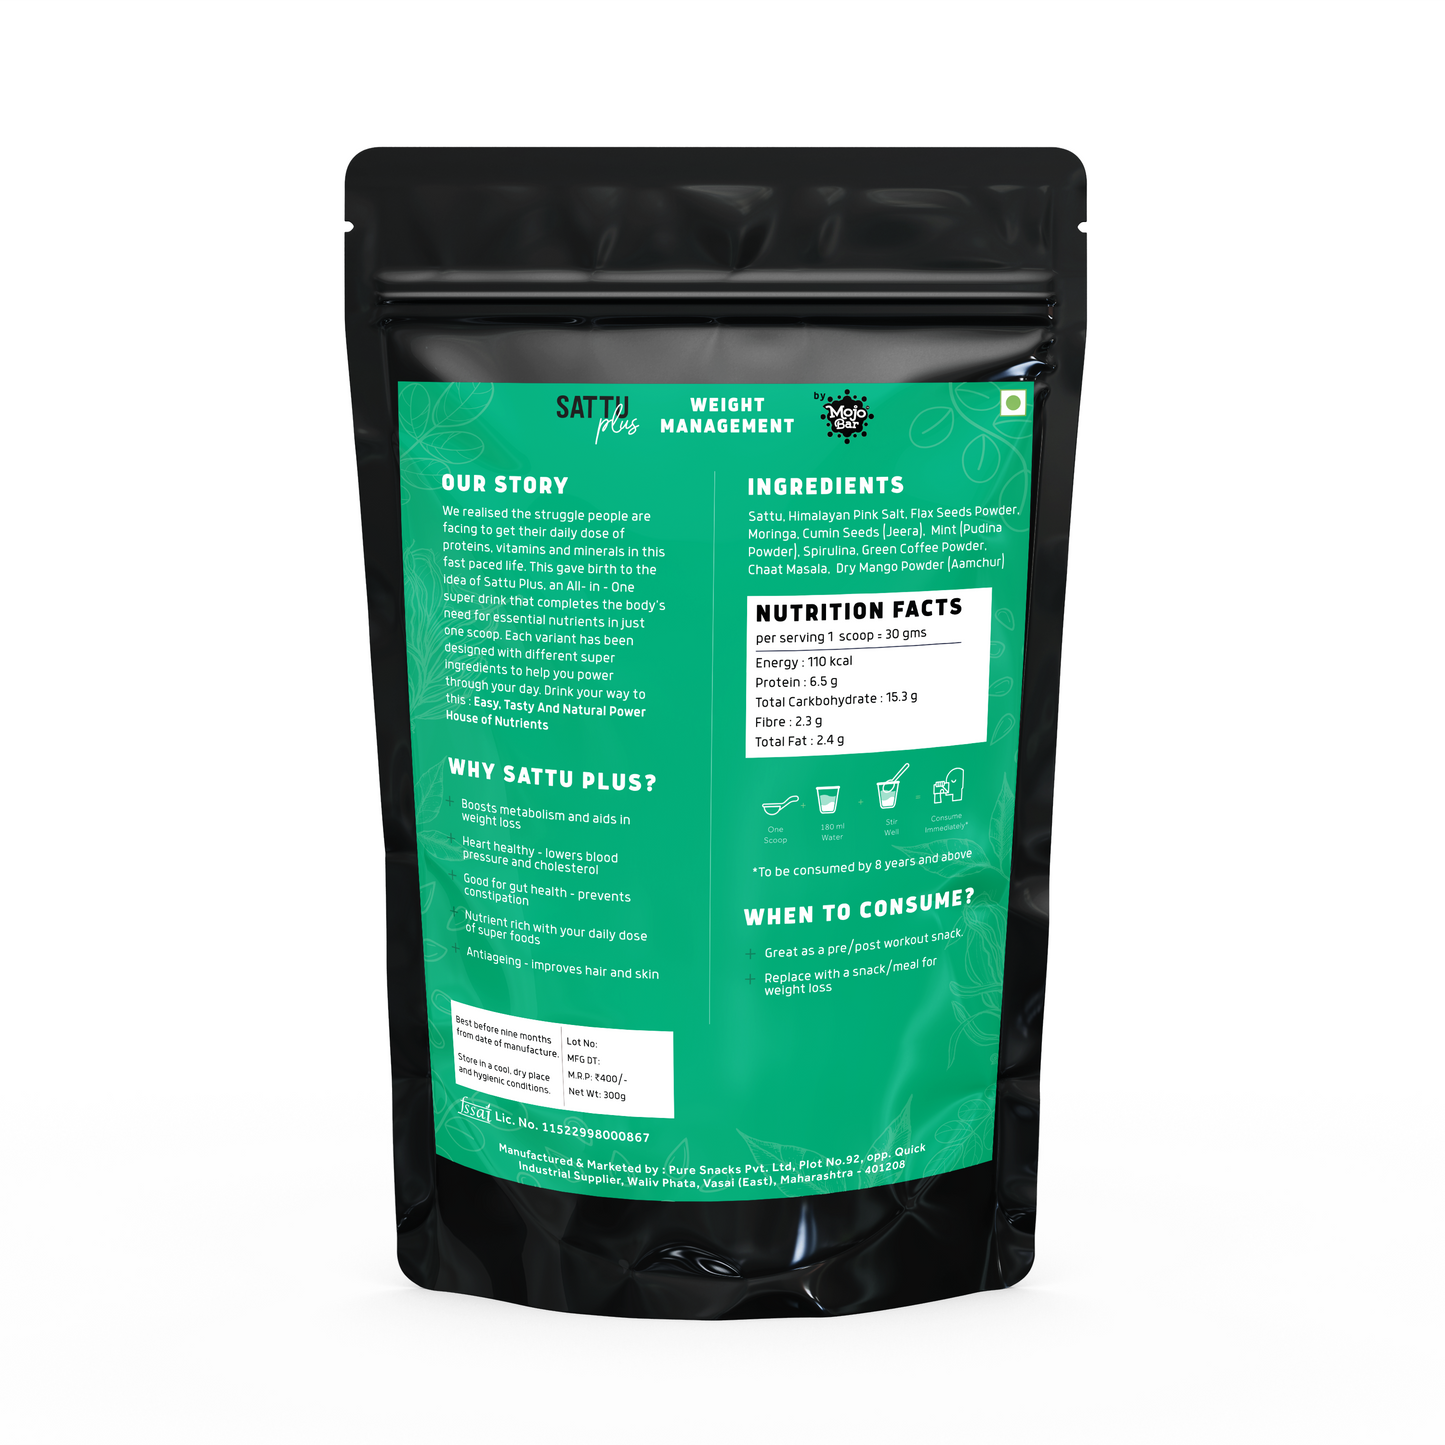 Sattu Plus - Savoury Protein Premix for Weight Management, 300g | Sattu, Moringa, Green Coffee, Spirulina and Flax Seeds | 100% Natural & Gluten Free - Mojo Snacks